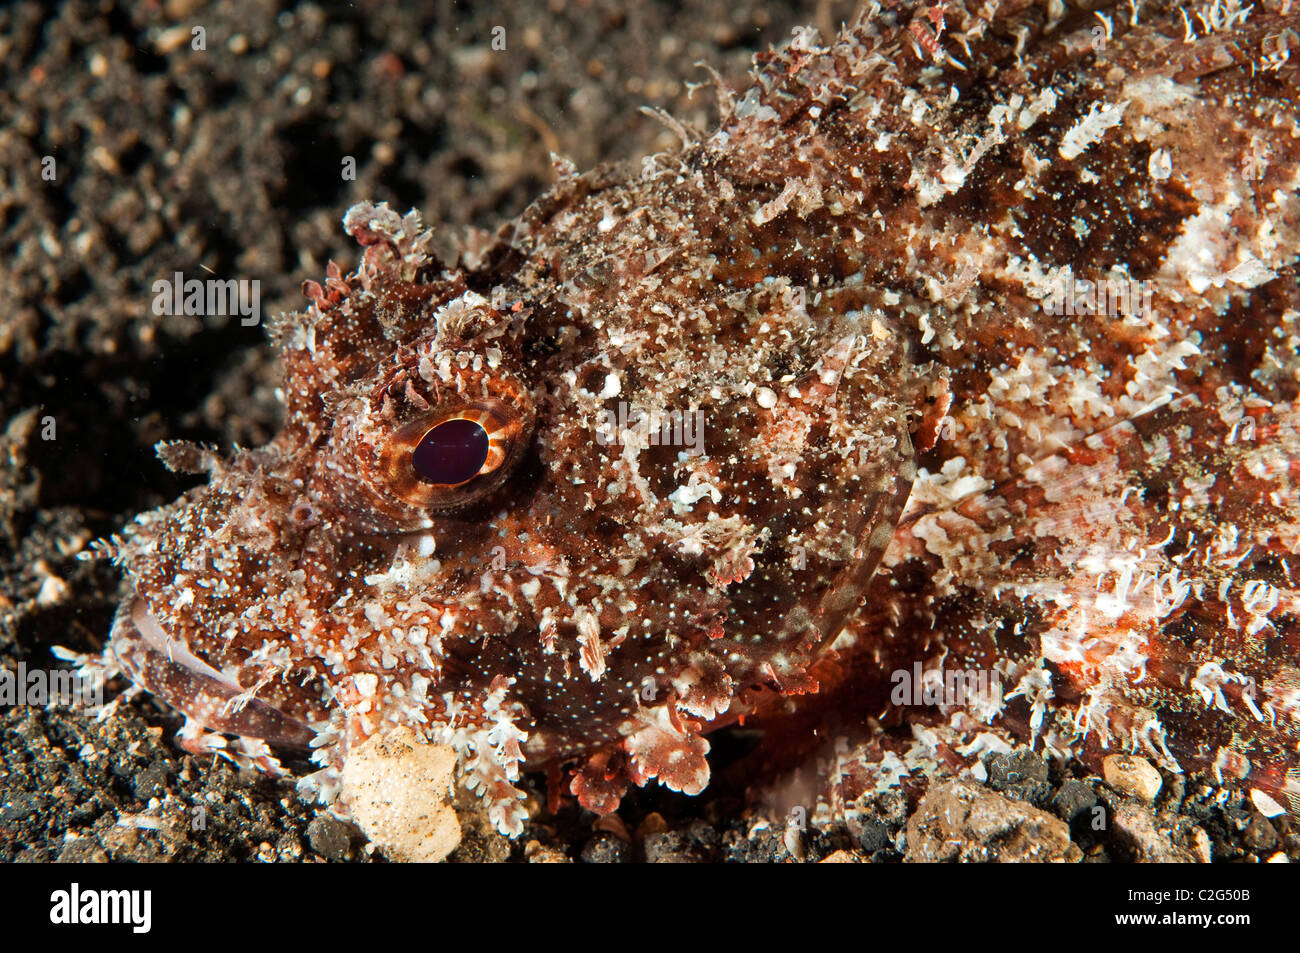 Raggy scorpionfish, Scorpaenopsis venosa, Sulawesi Indonesia. Stock Photo